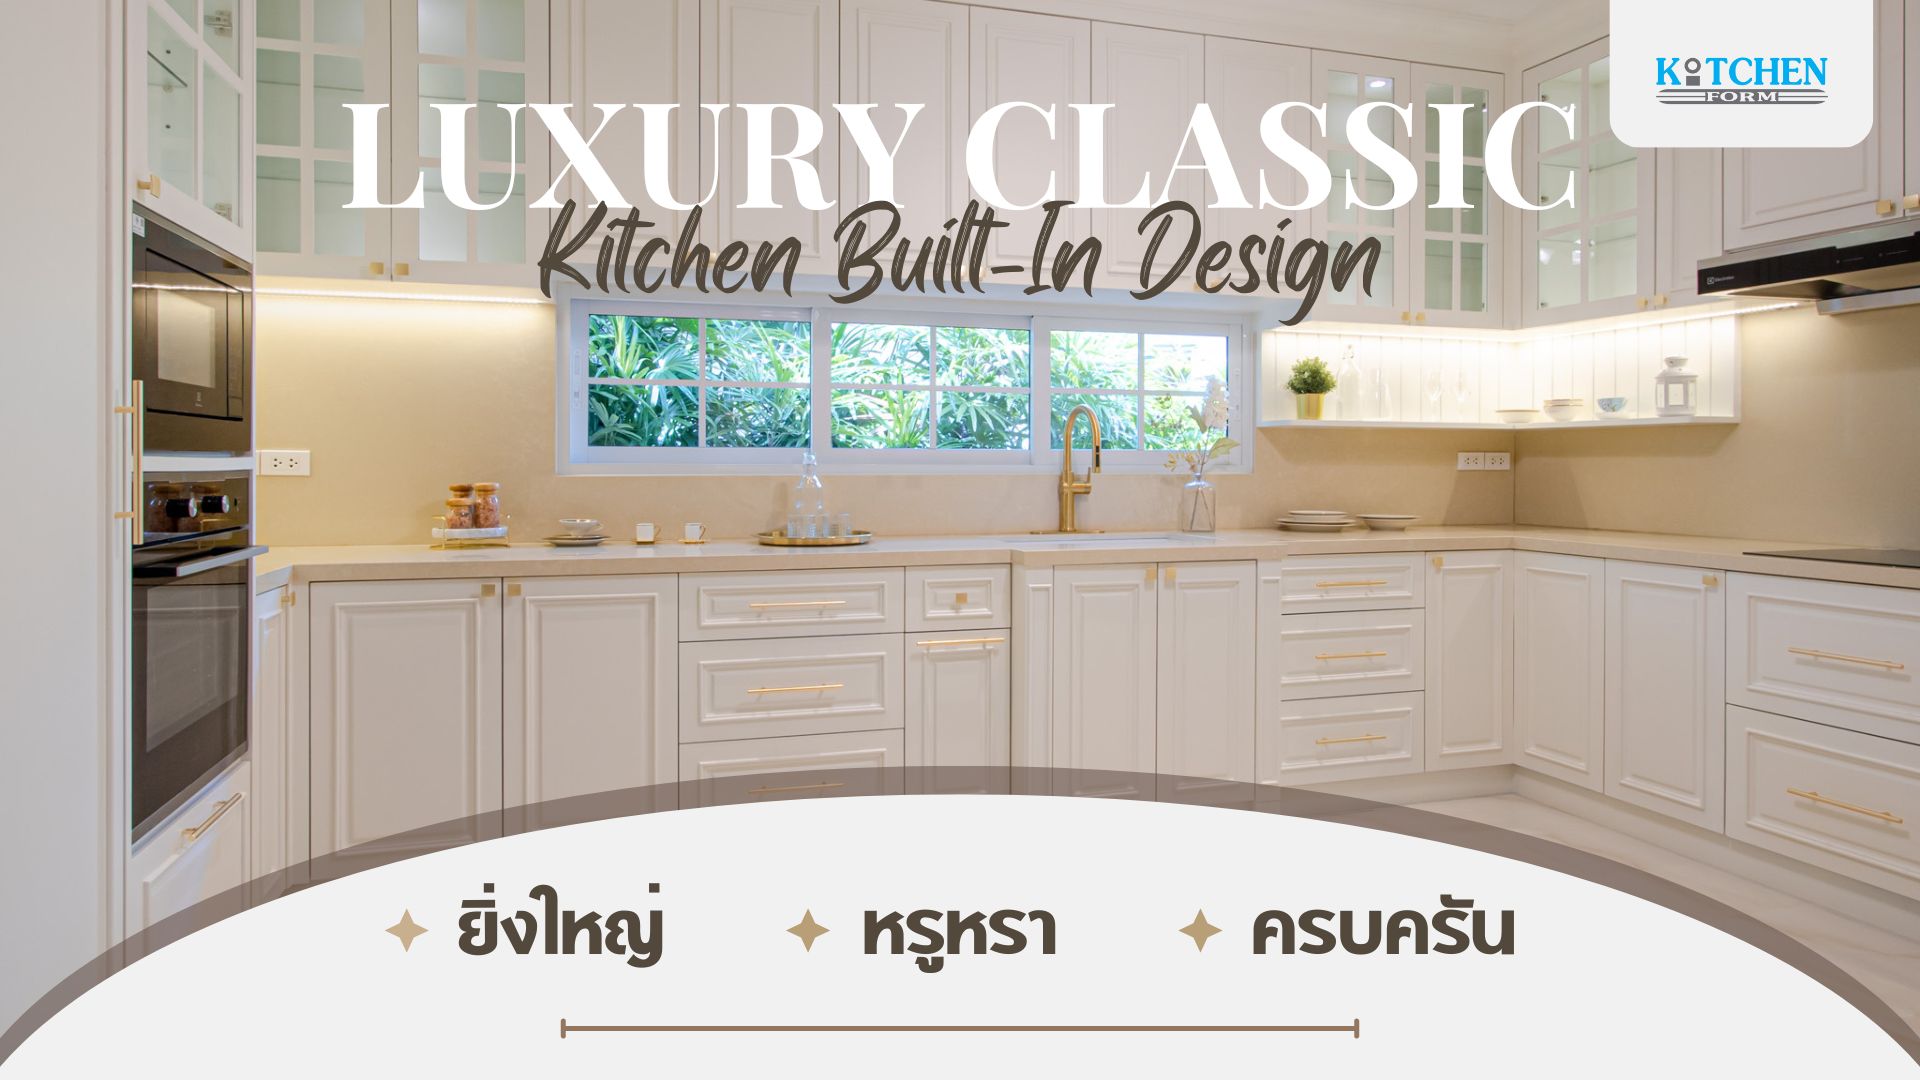 Luxury Classic Kitchen ชุดครัวสุดหรู ดีไซน์ยิ่งใหญ่ ฟังก์ชั่นอลัง, ชุดครัว, ครัวบิ้วอิน, เฟอร์นิเจอร์บิ้วอิน, บิ้วอินตกแต่งภายใน, Kitchen, Kitchenform,